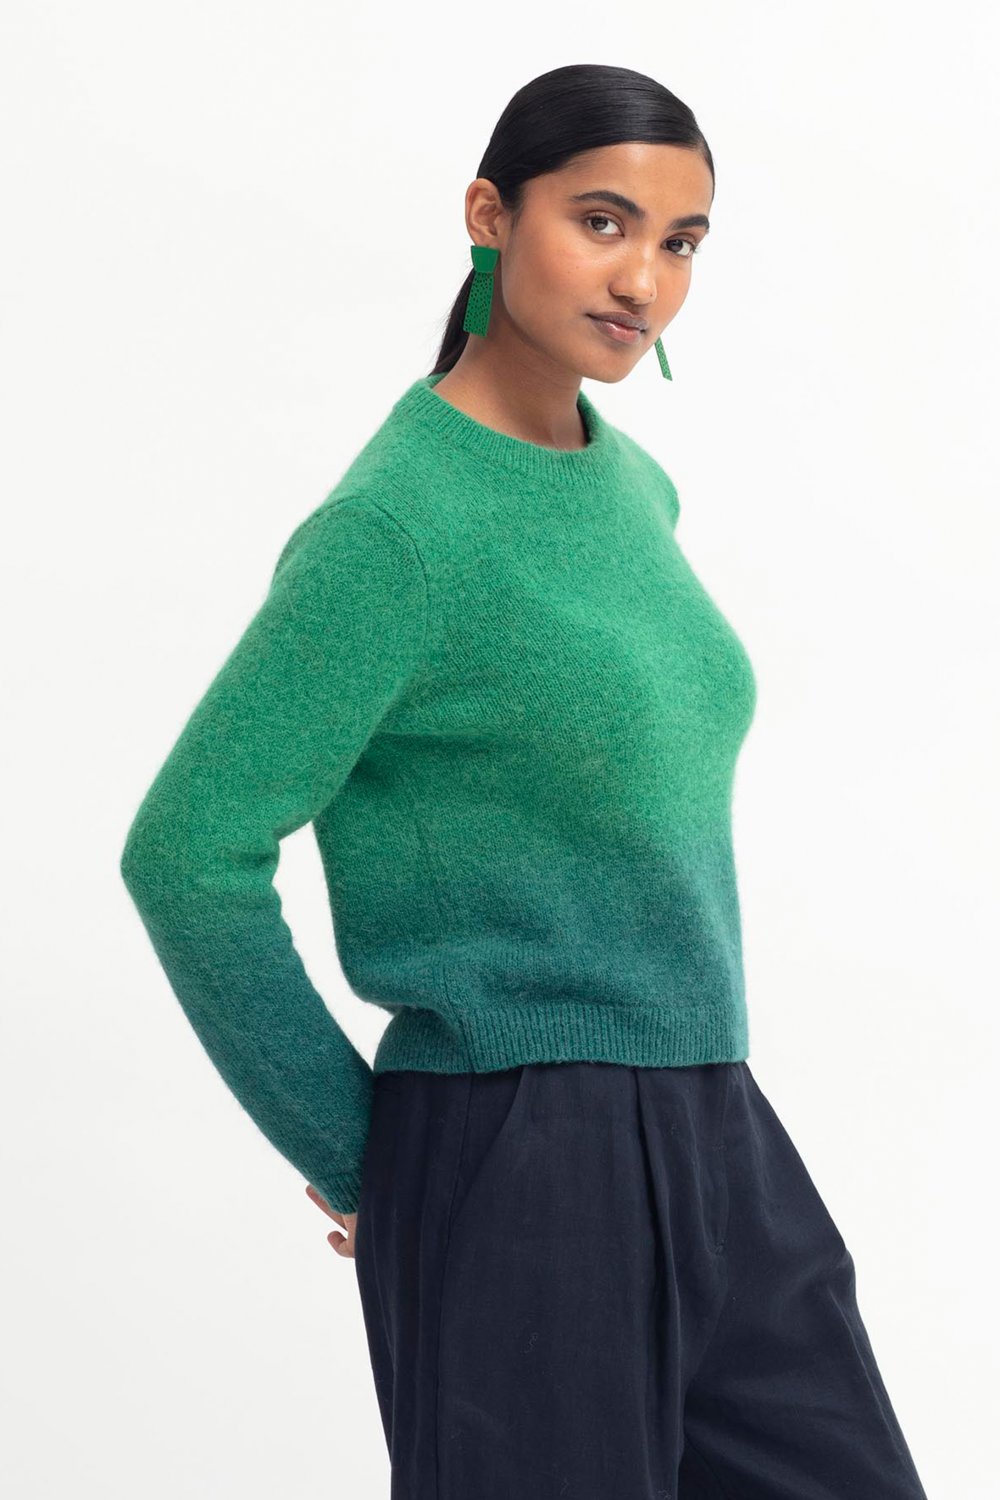 elk-ombre-sweater-green-teal 2